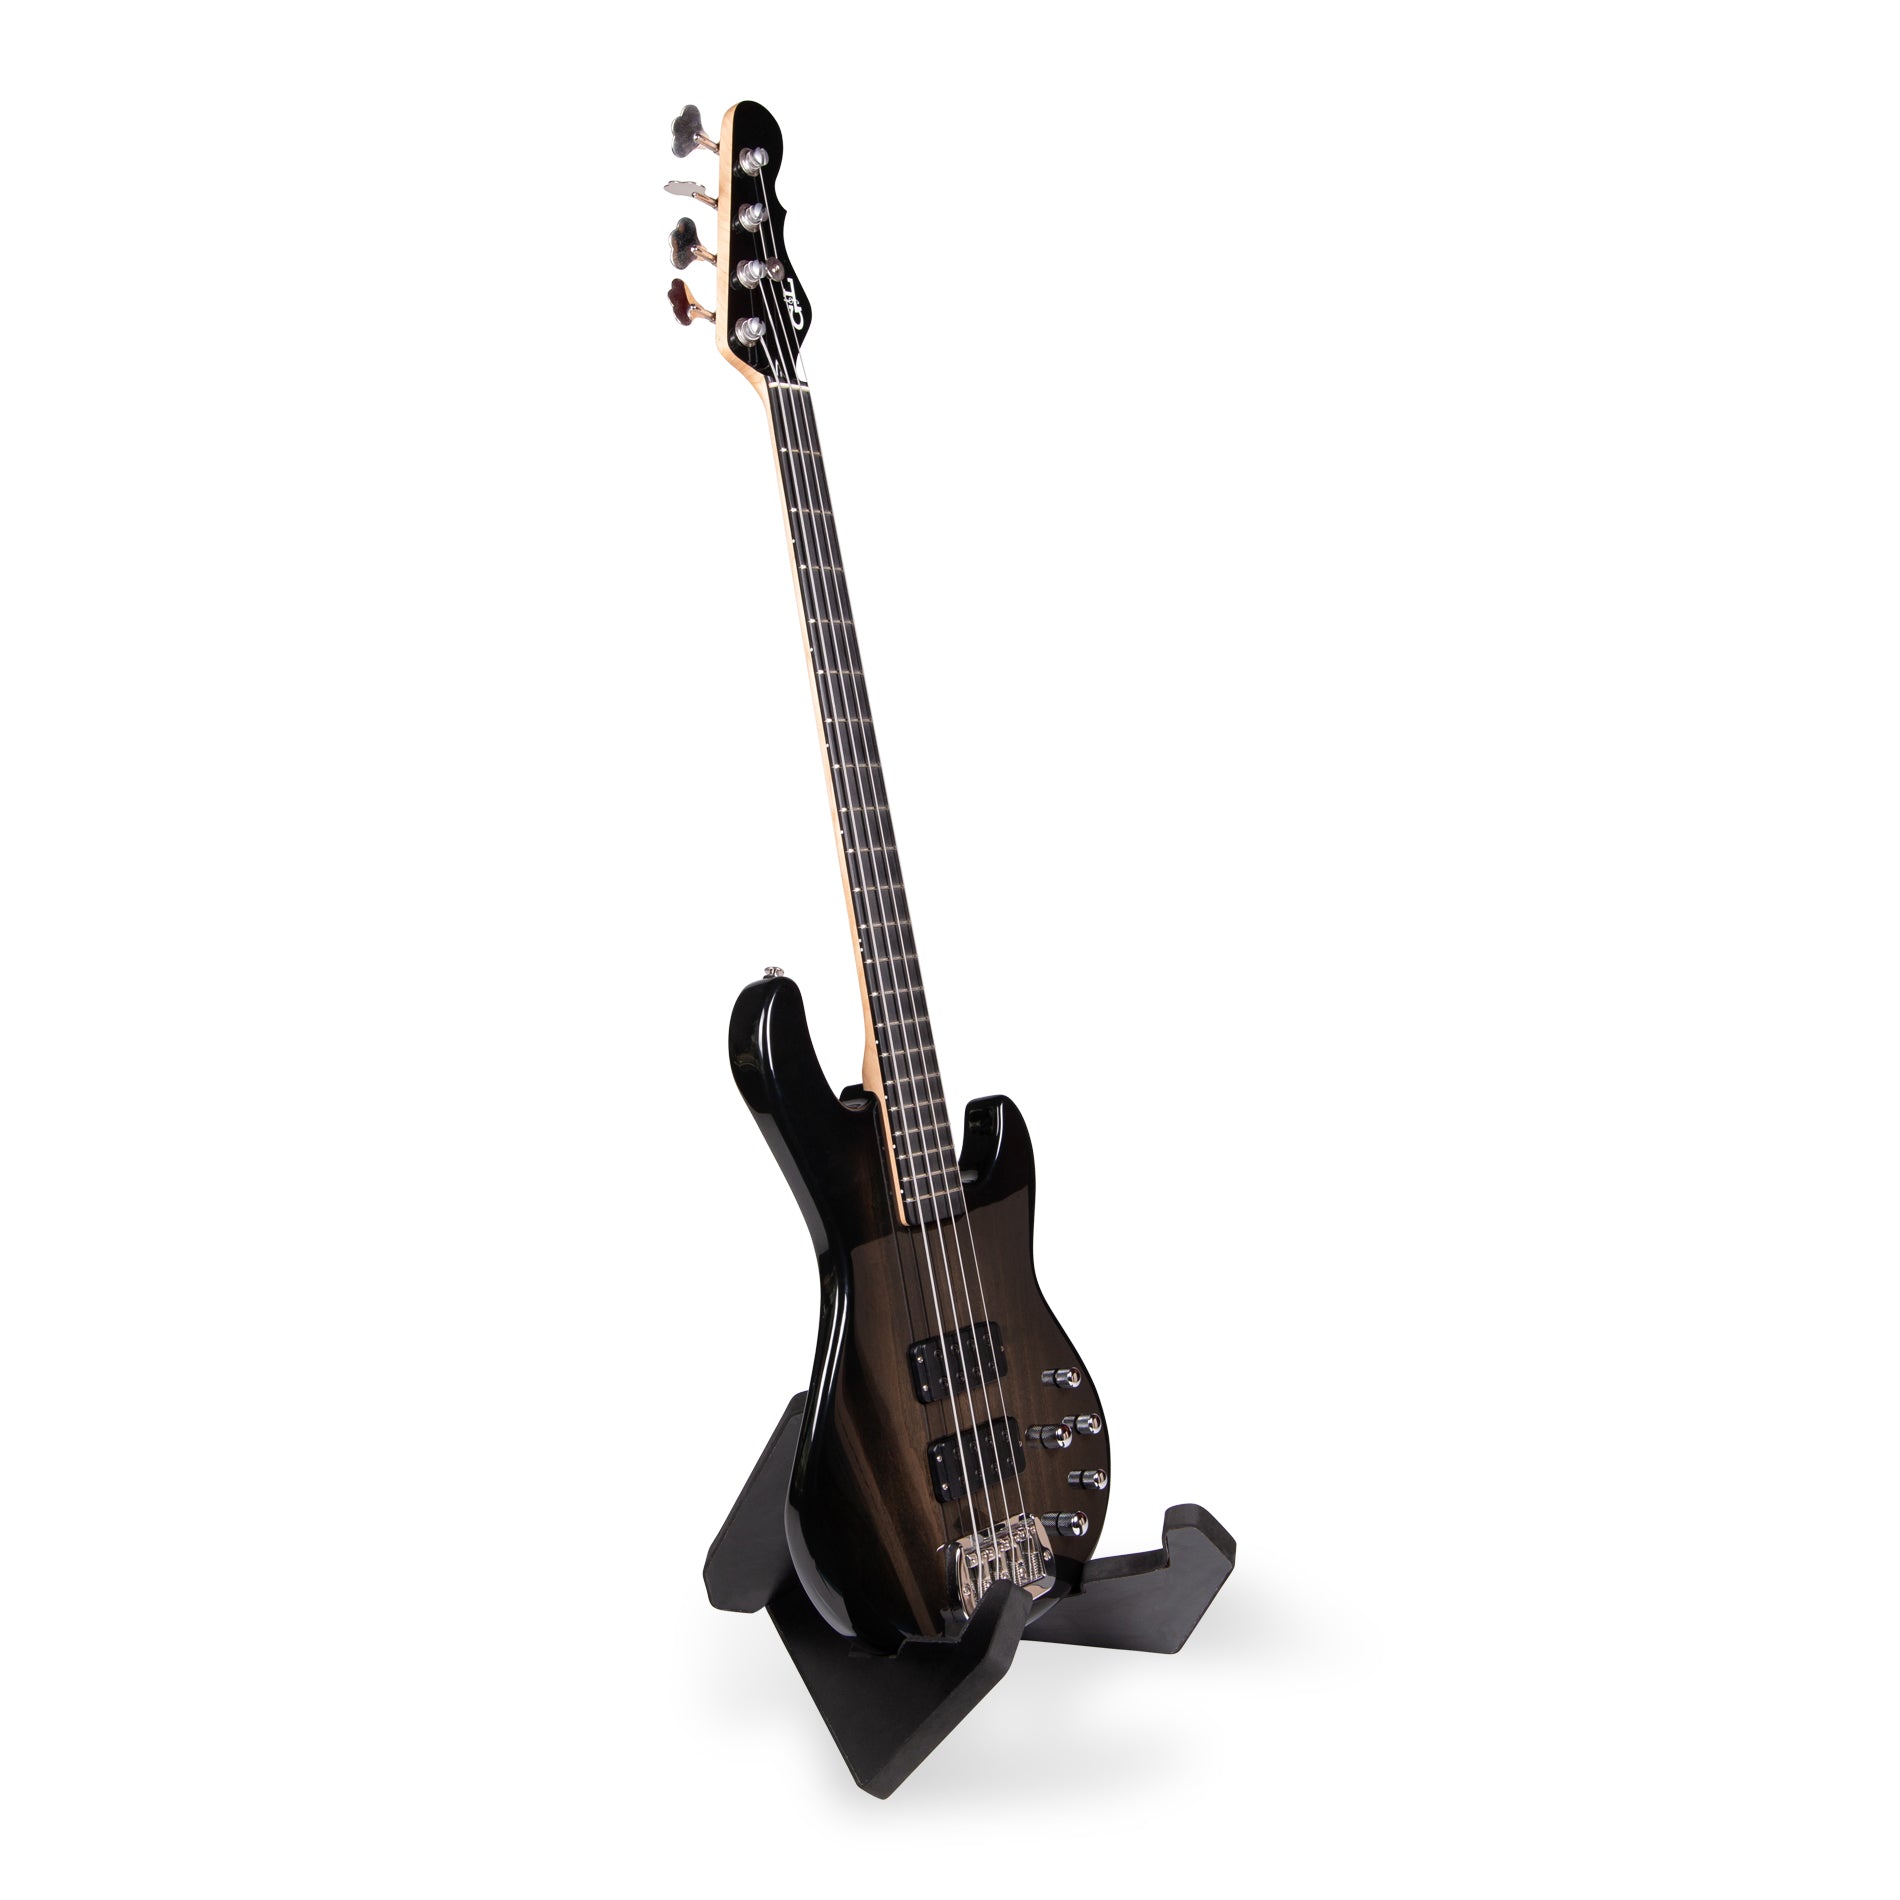 Gator Frameworks | Elite Series Guitar Furniture X Stand - Black